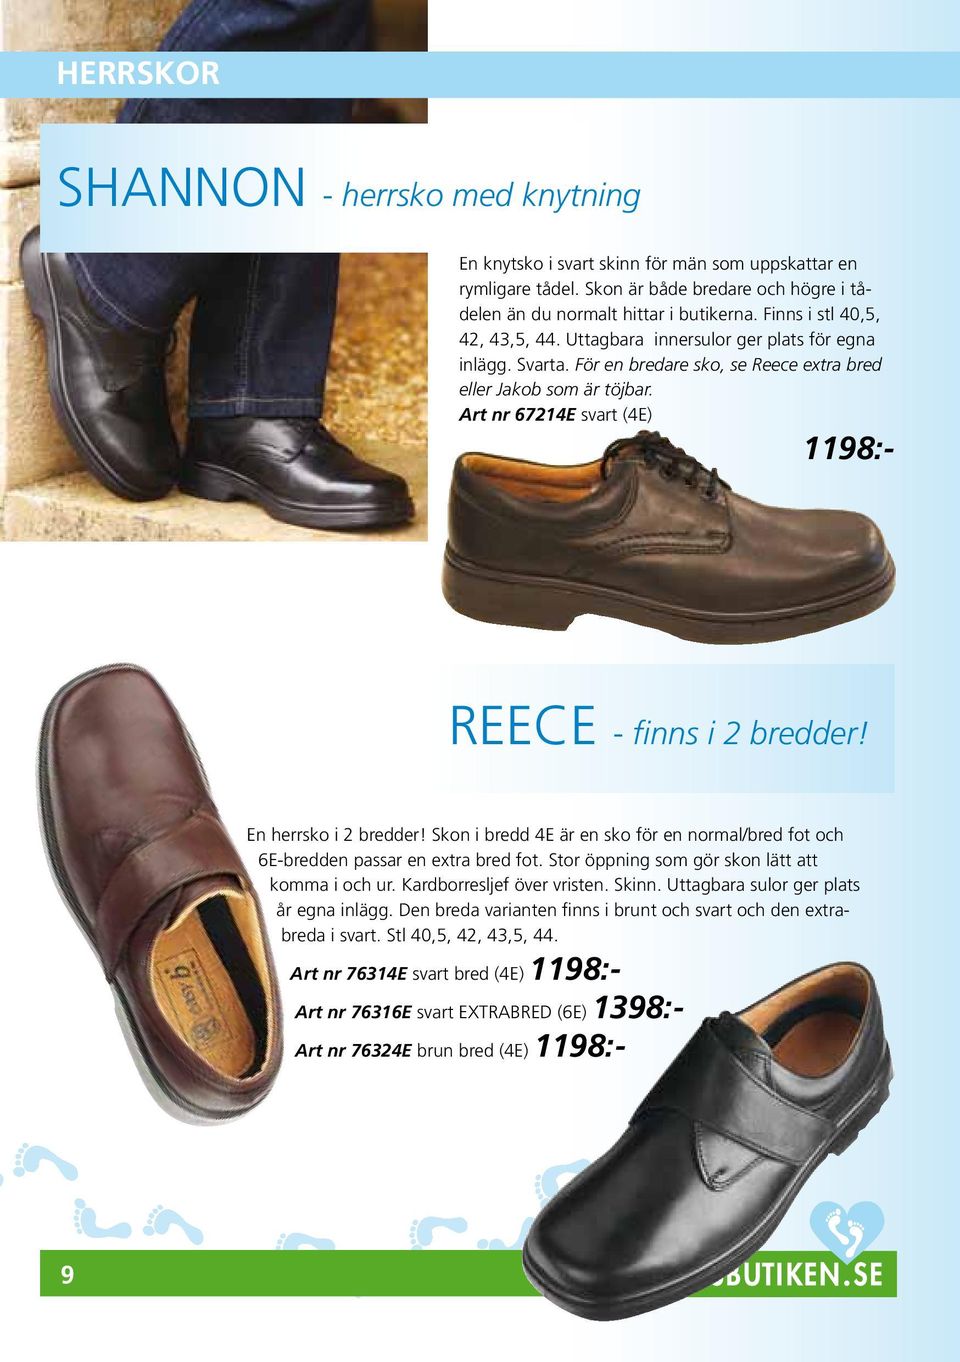 Art nr 67214E svart (4E) 1198:- REECE - finns i 2 bredder! En herrsko i 2 bredder! Skon i bredd 4E är en sko för en normal/bred fot och 6E-bredden passar en extra bred fot.